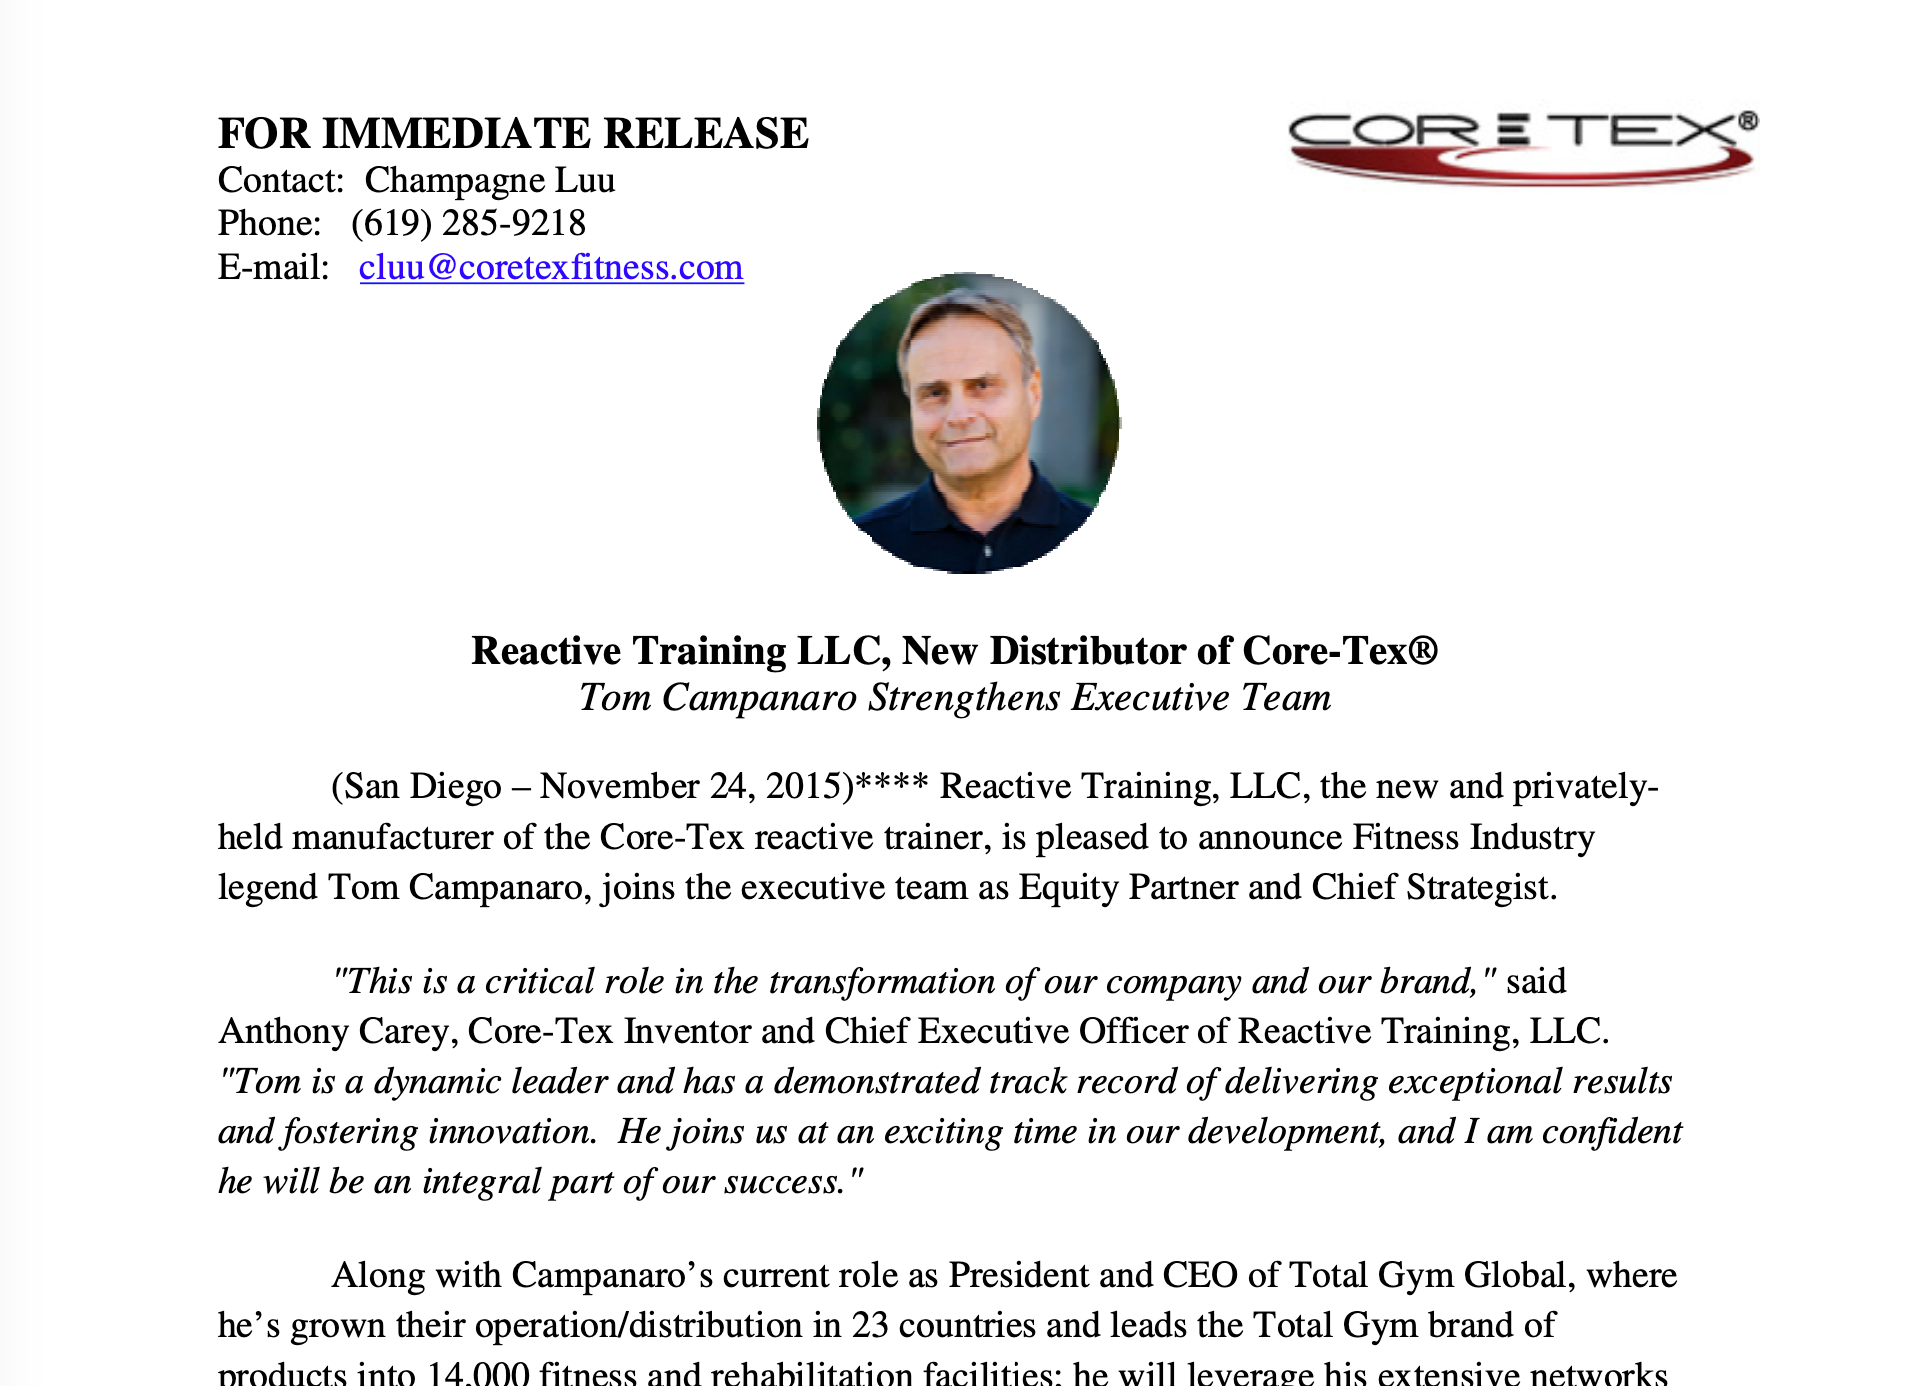 COMPANY PRESS RELEASE, NOVEMBER 24, 2015: Tom Campanaro Joins Reactive Training, LLC